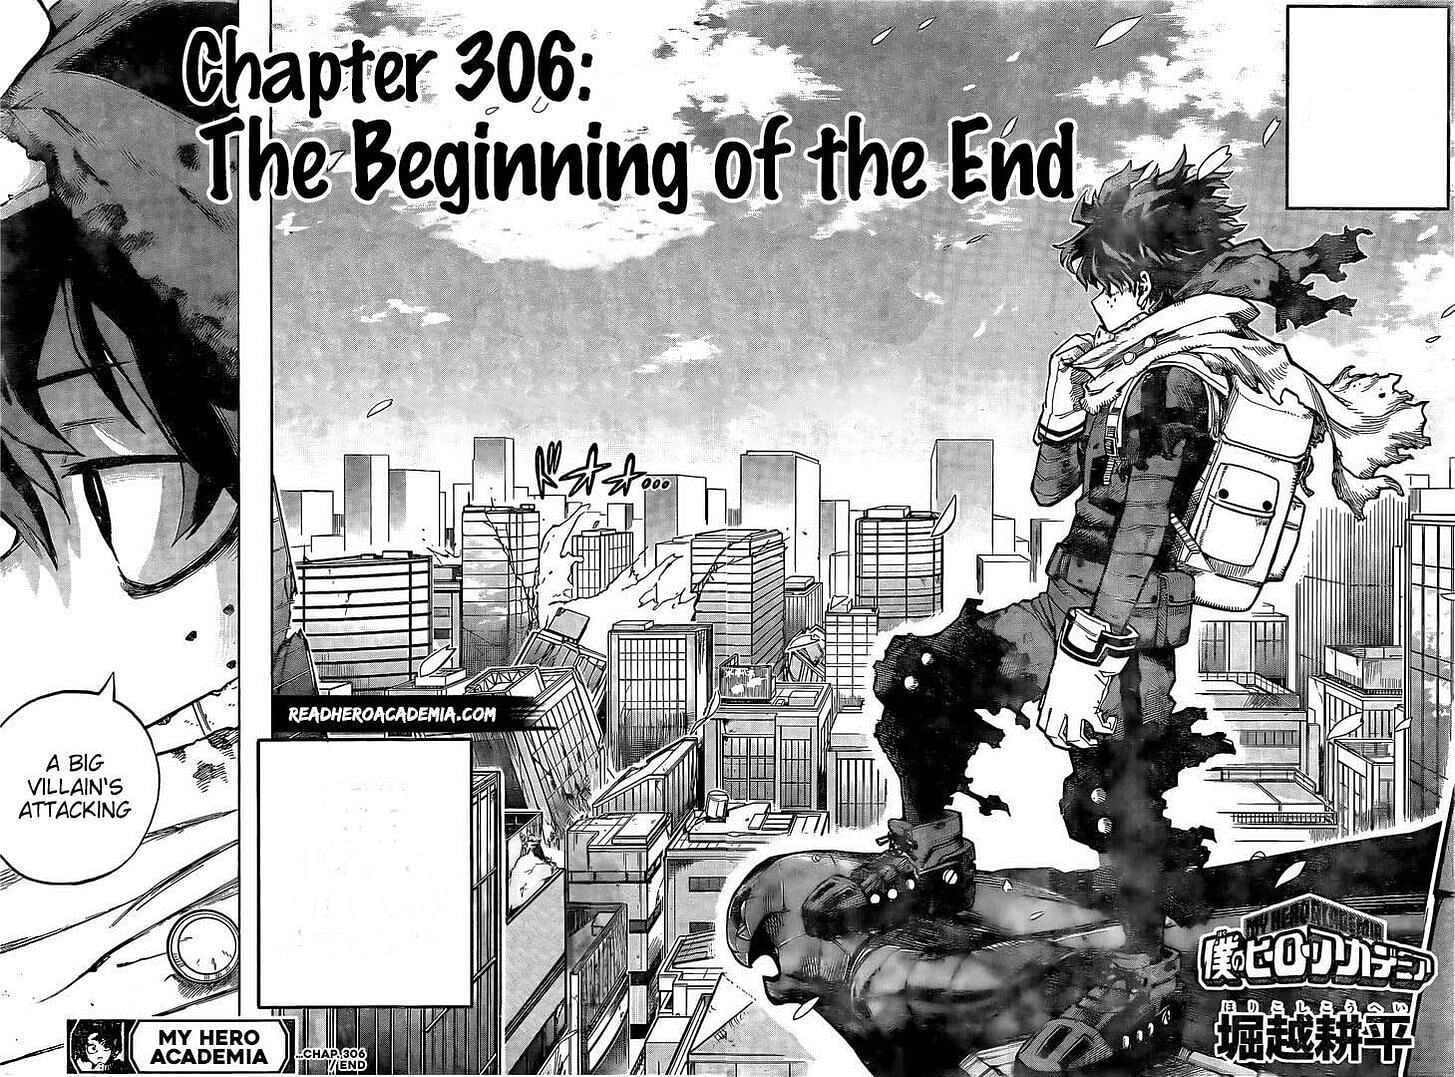 Manga panel from My Hero Academia Chapter 306 (Image via Reddit)